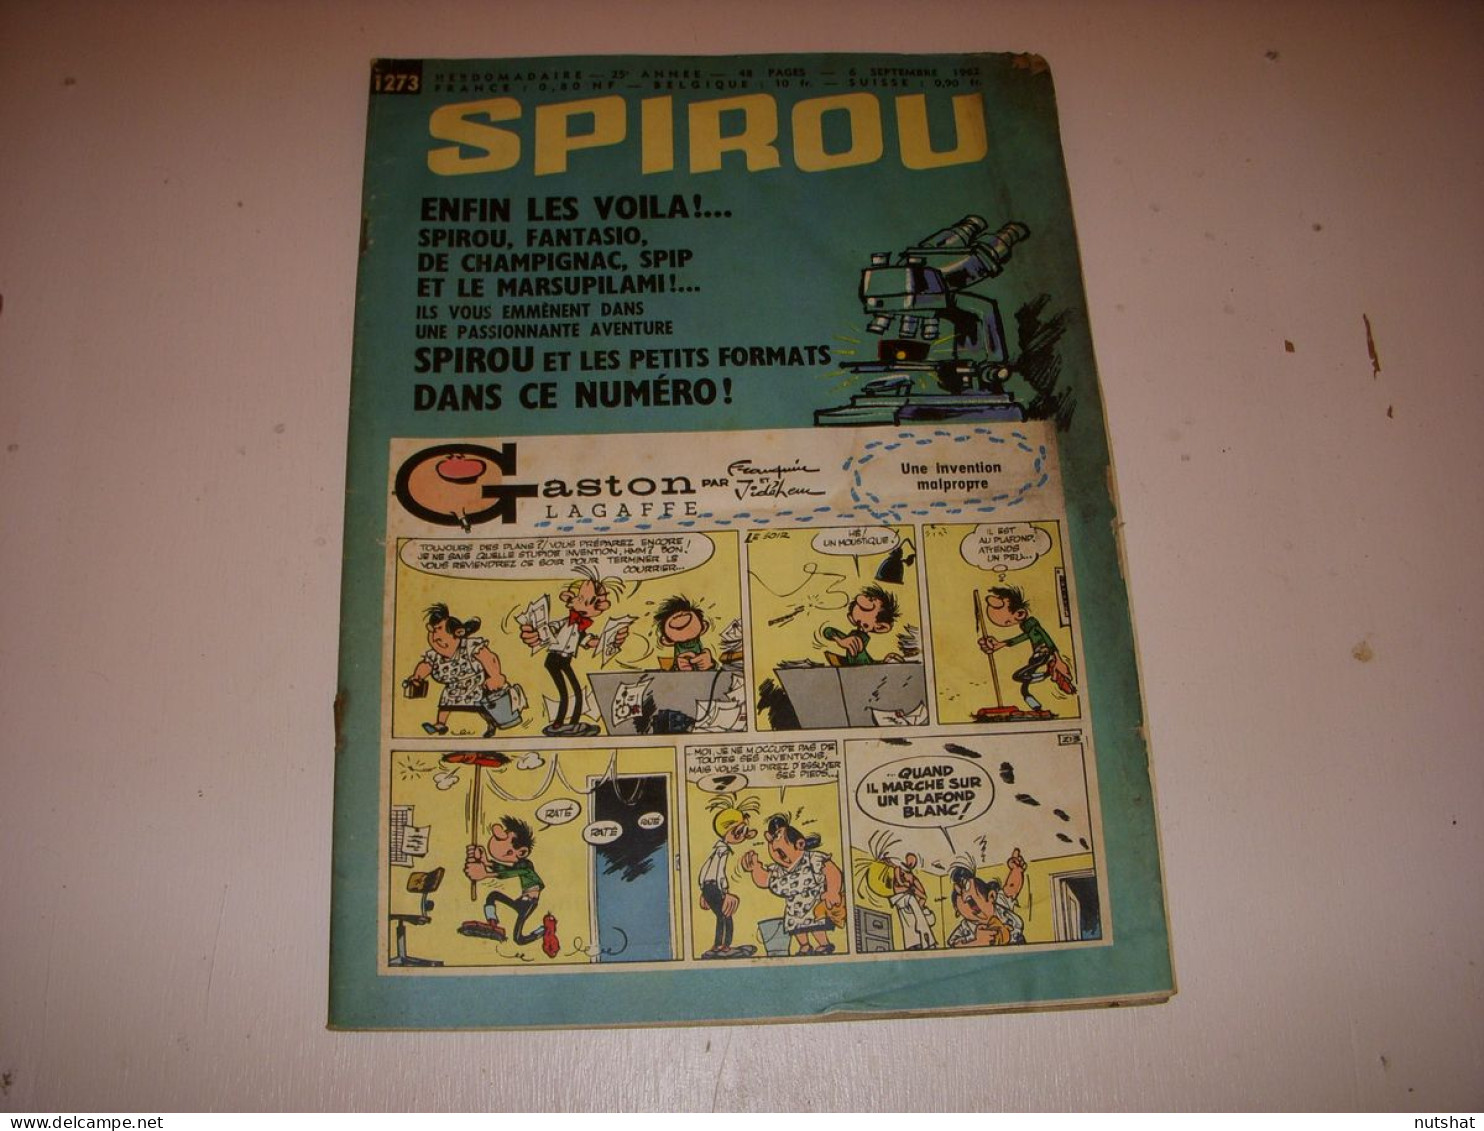 SPIROU 1273 06.09.1962 Raymond MARCILLAC Le FURET CONCOURS EUROPRESS-JUNIOR      - Spirou Magazine